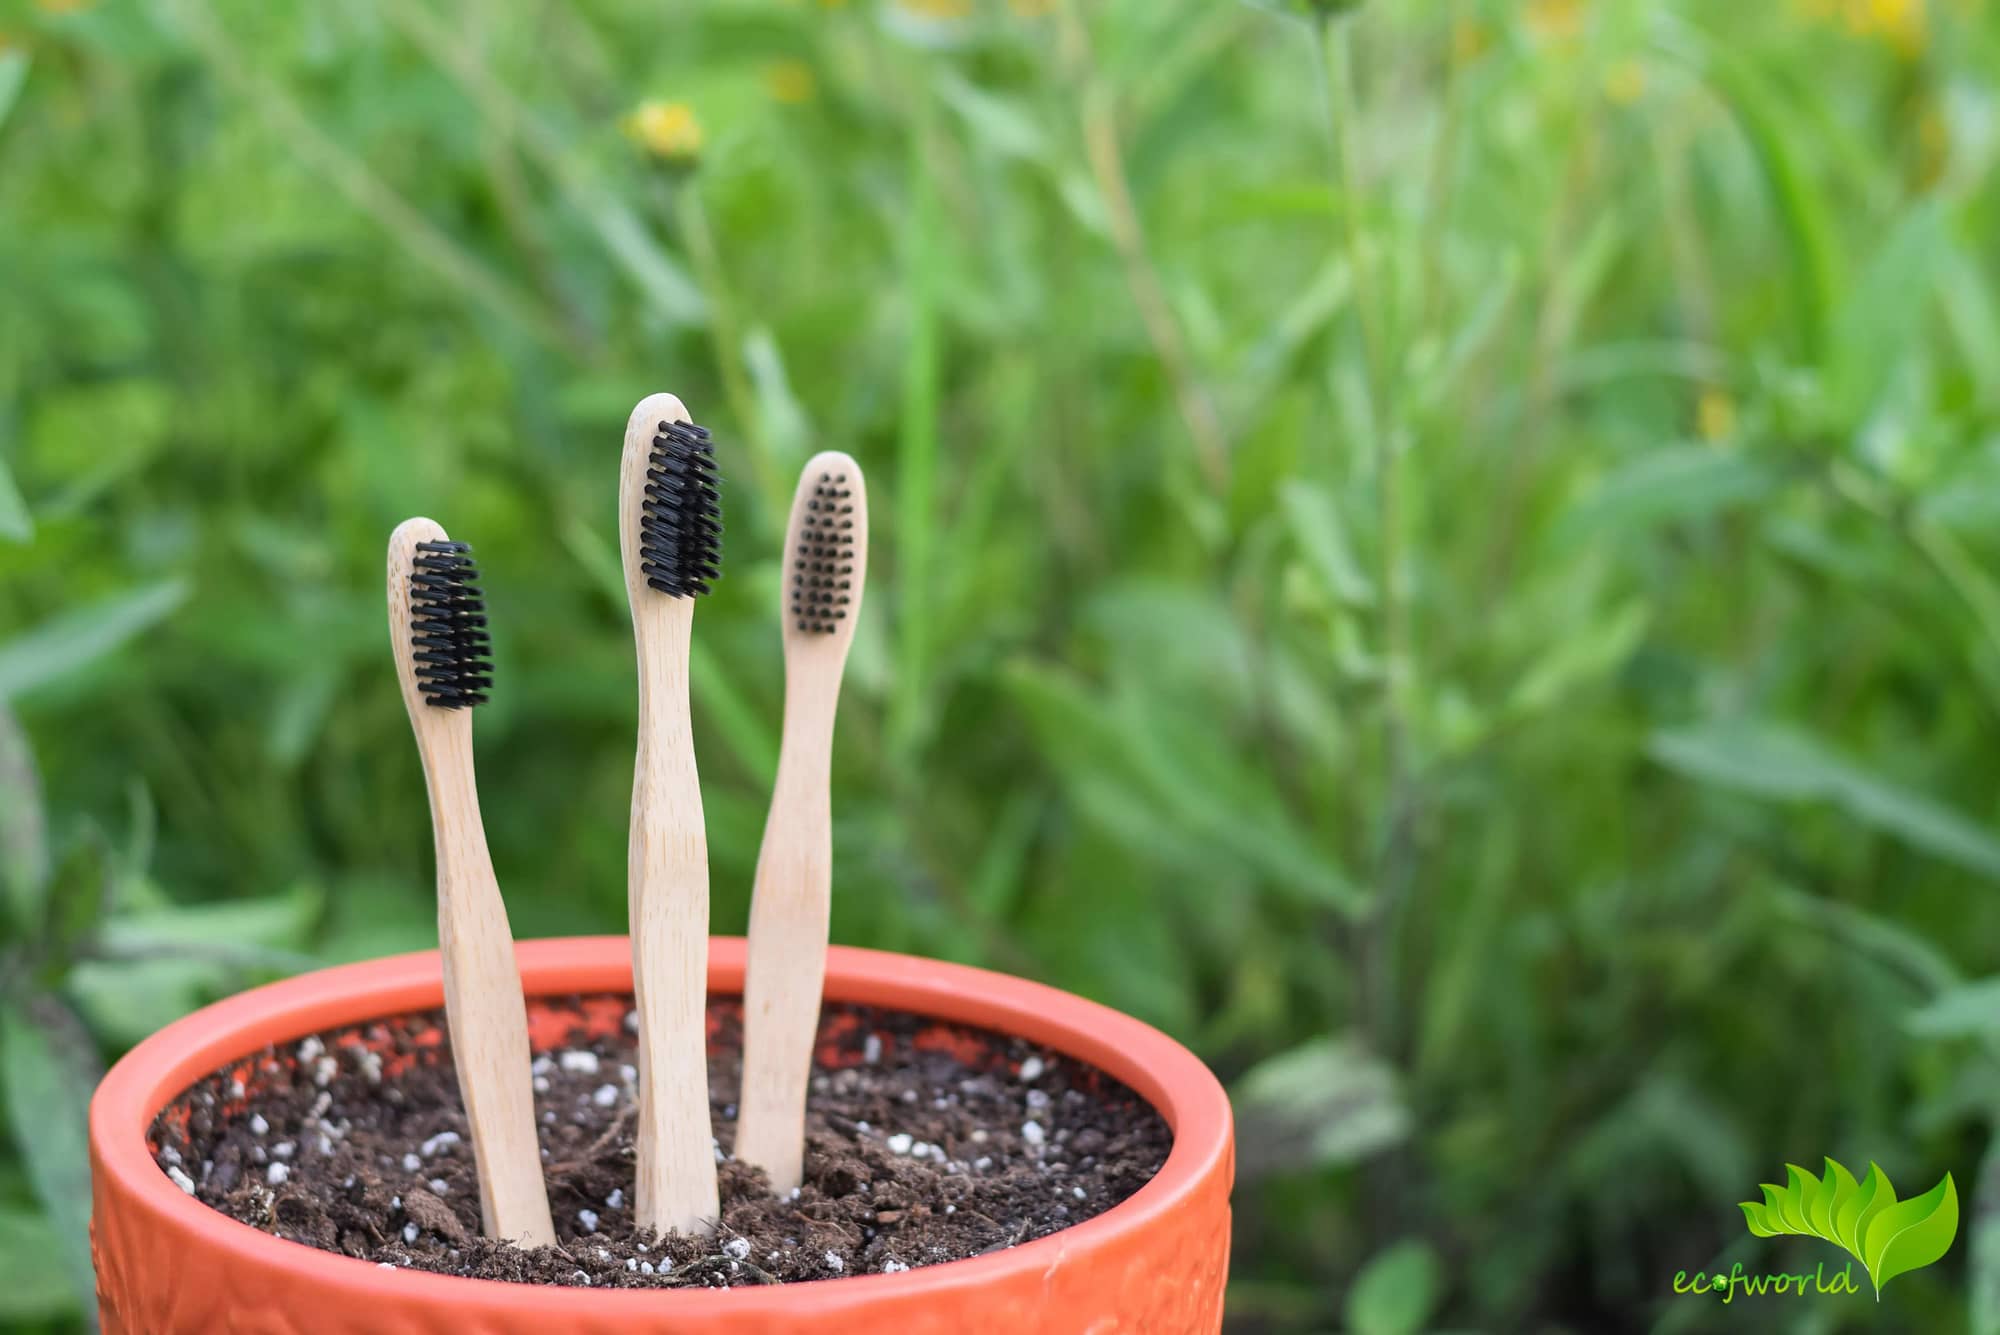 ecofworld bamboo toothbrush compostable recycle soil return